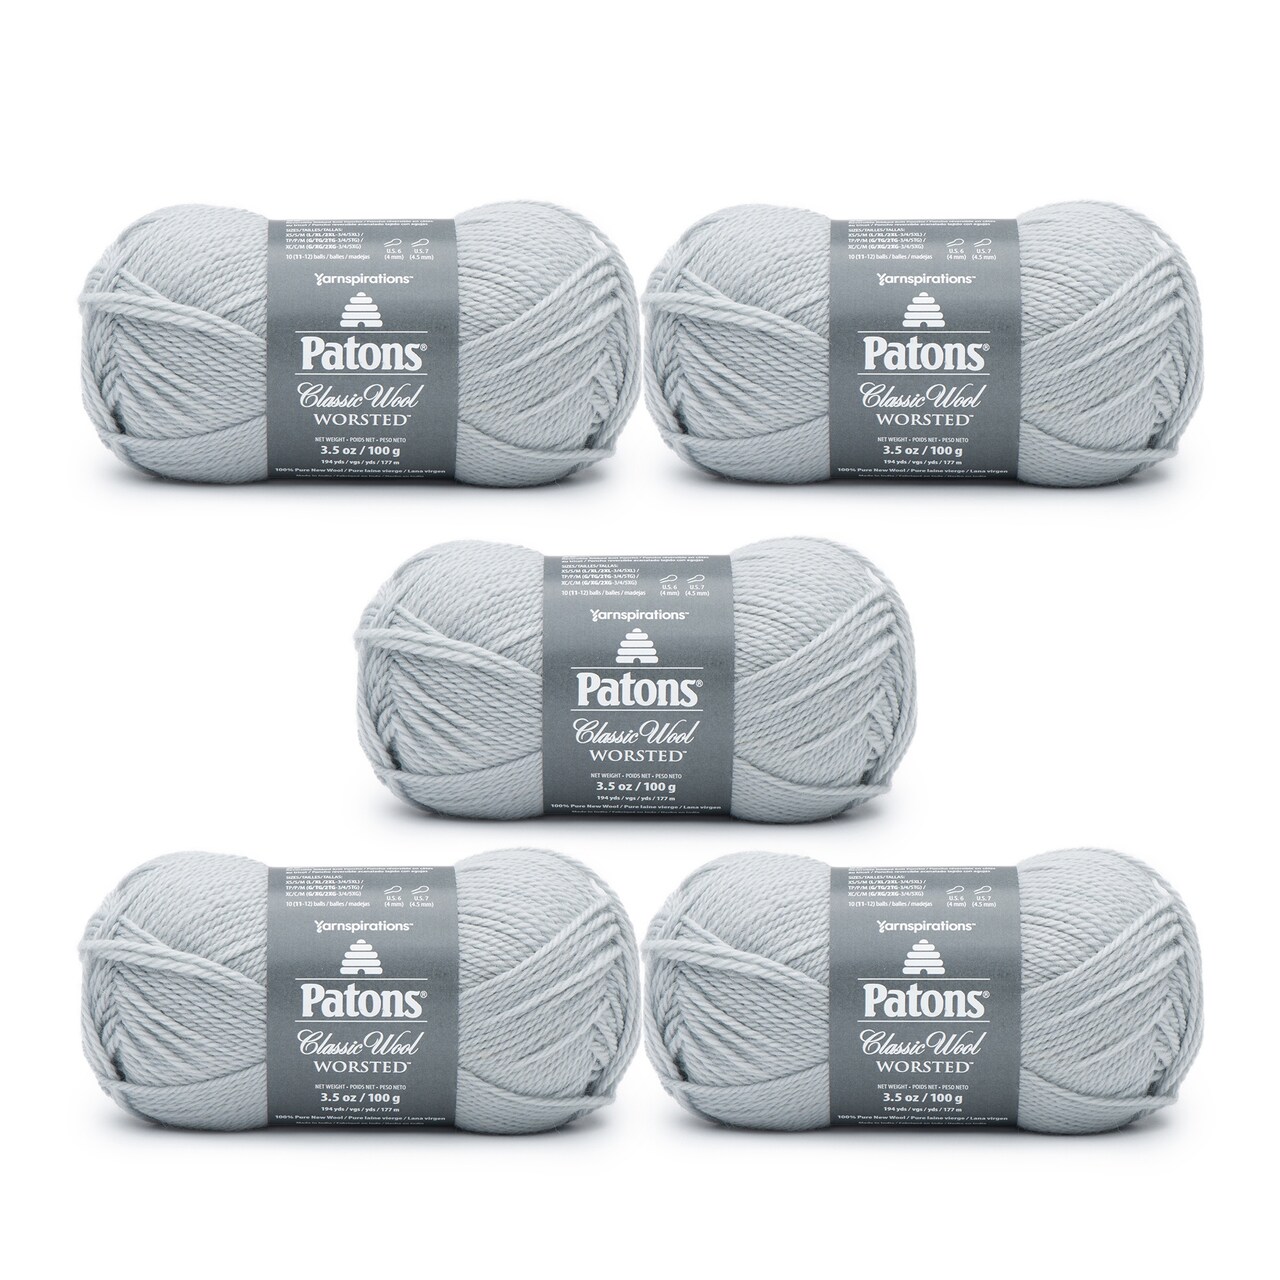 Patons Classic Wool Cool Gray Yarn - 5 Pack of 3.5oz/100g - Wool